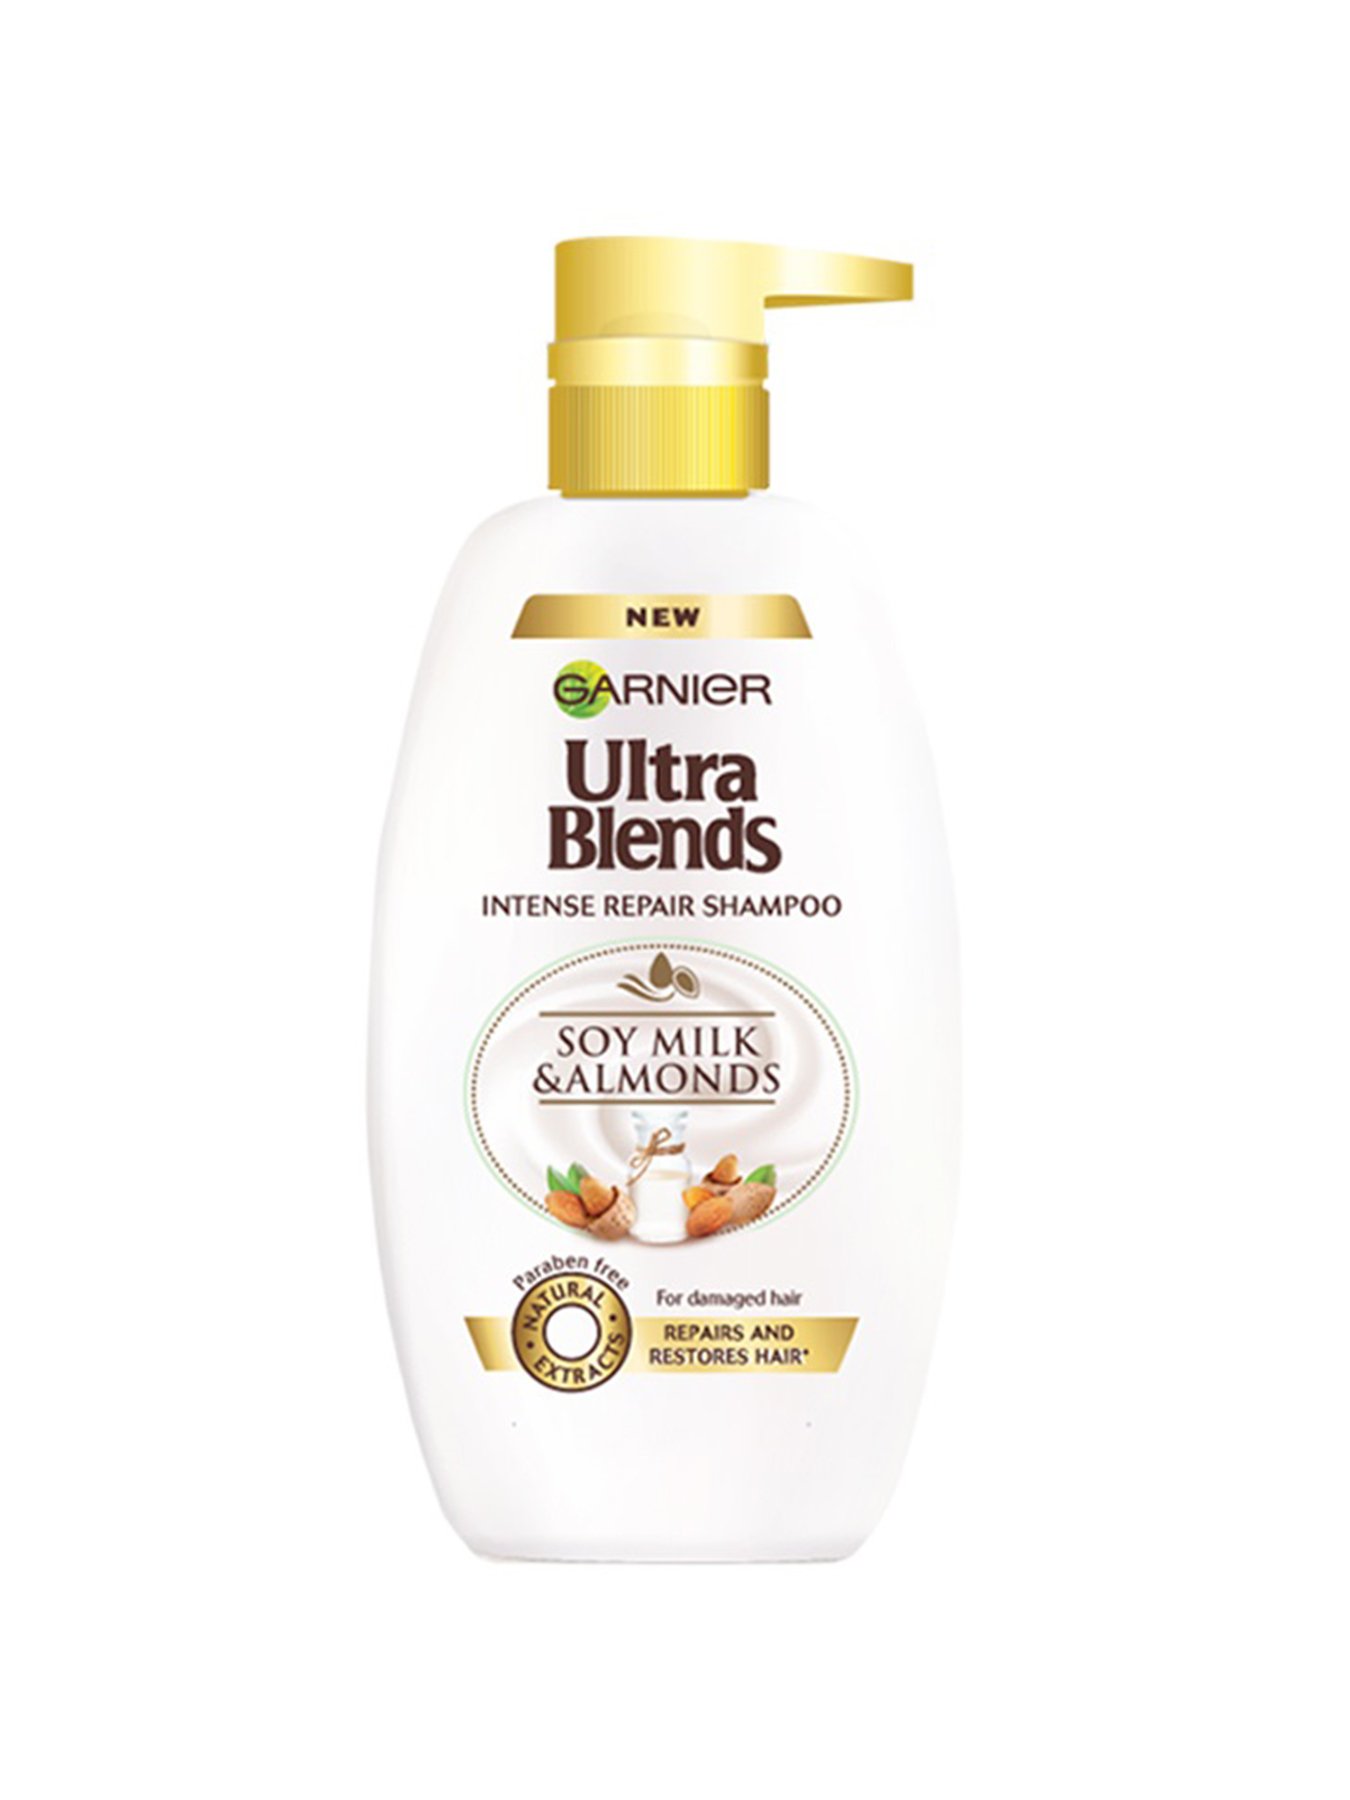 Garnier Ultra Blends Soy Milk and Almonds Shampoo 640 ml